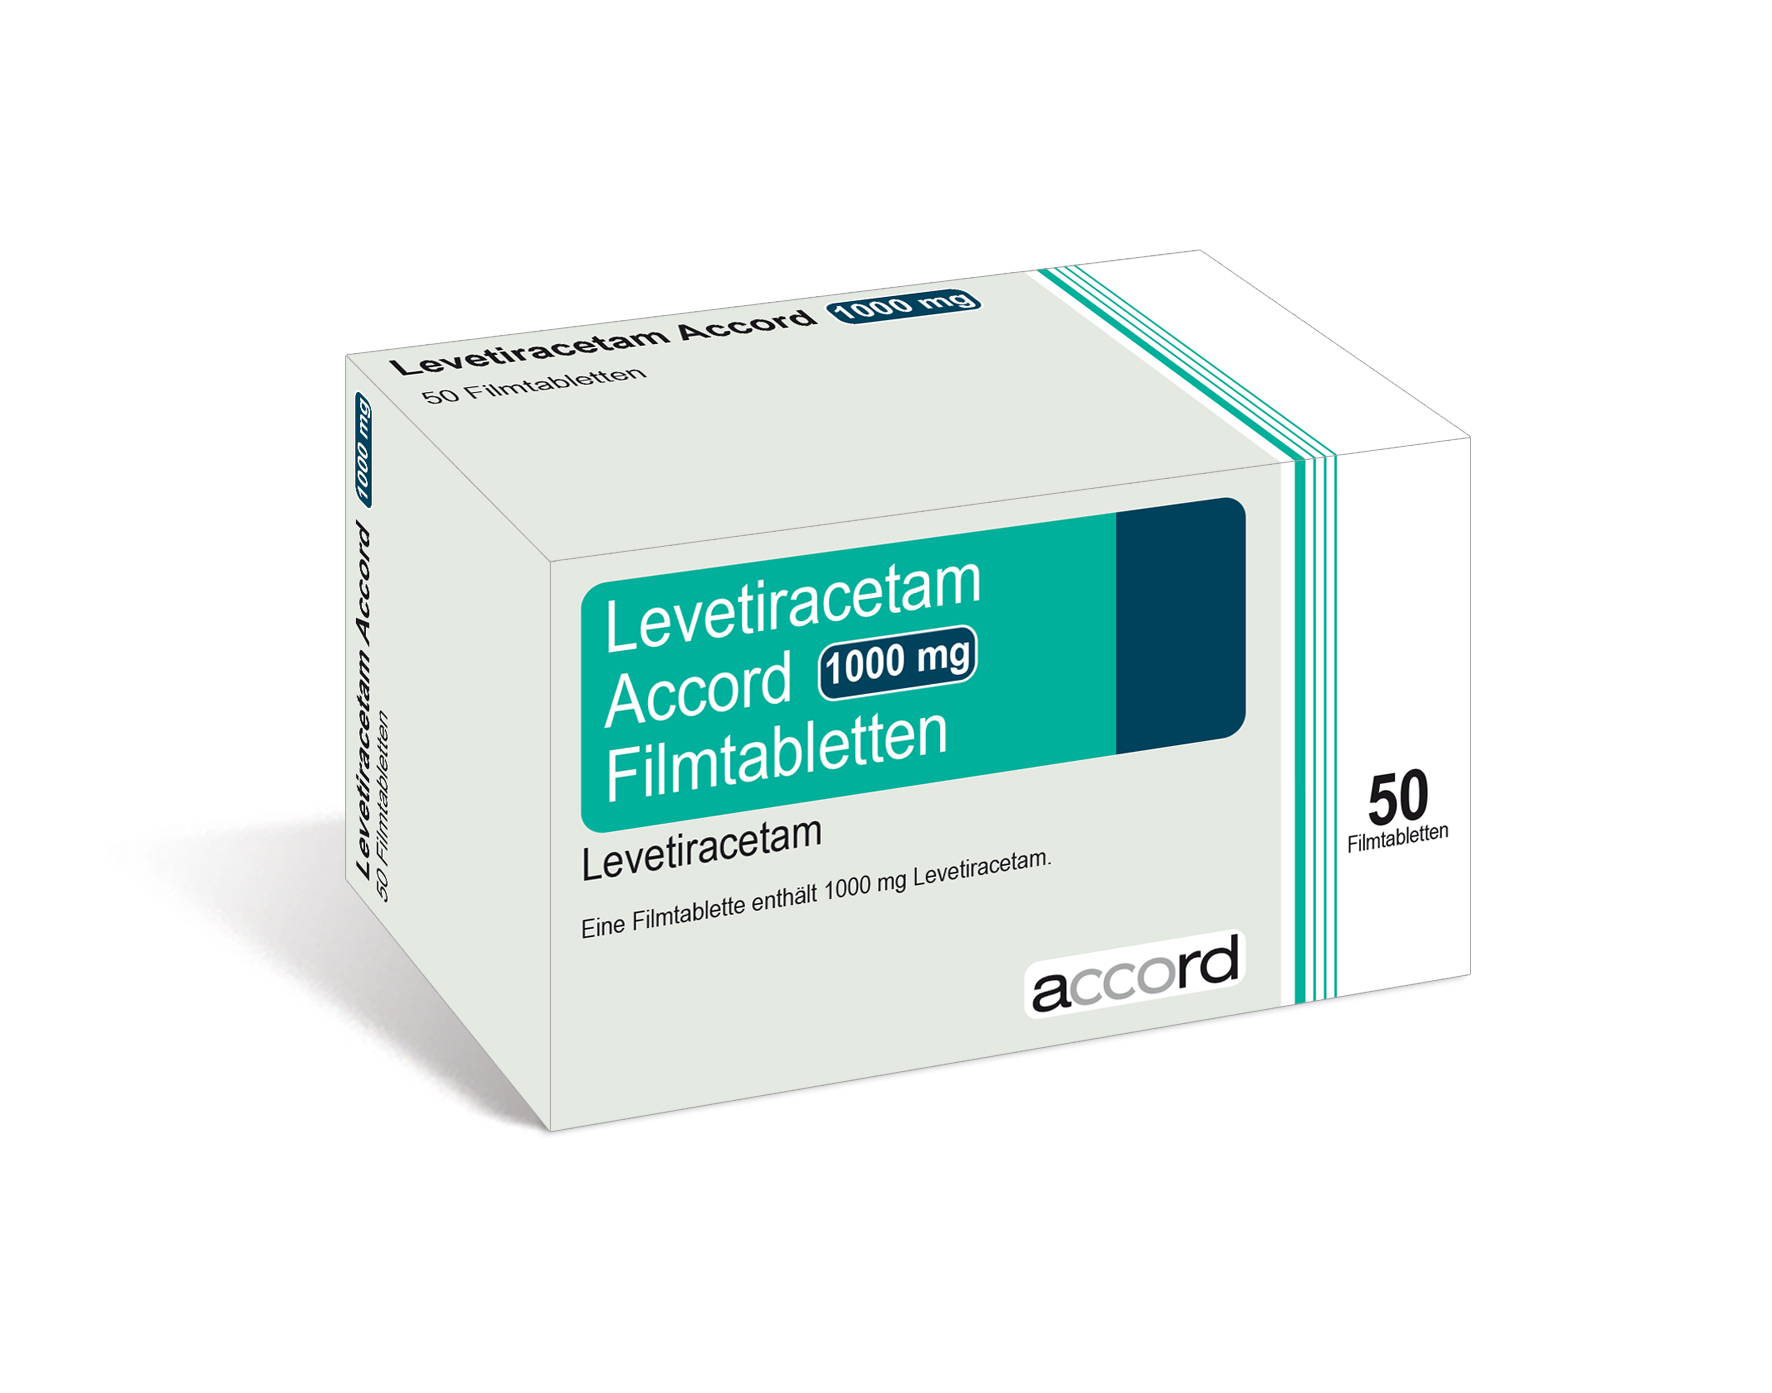 Accord Packshot Levetiracetam 1000 mg